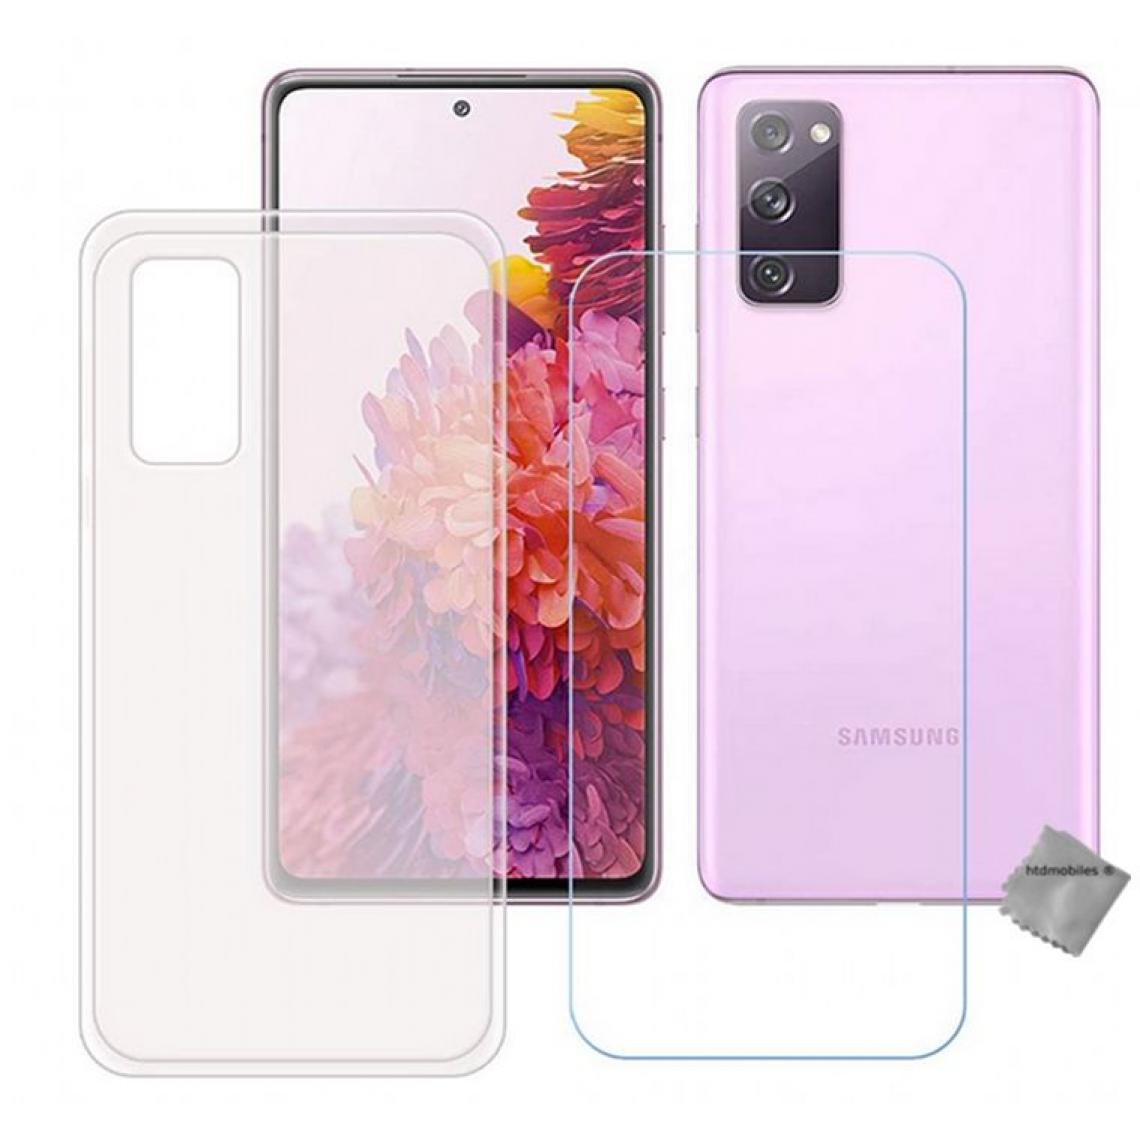 Htdmobiles - Housse etui coque pochette silicone gel fine pour Samsung Galaxy S20 FE 5G (Fan Edition) + film ecran - BLANC TRANSPARENT - Coque, étui smartphone